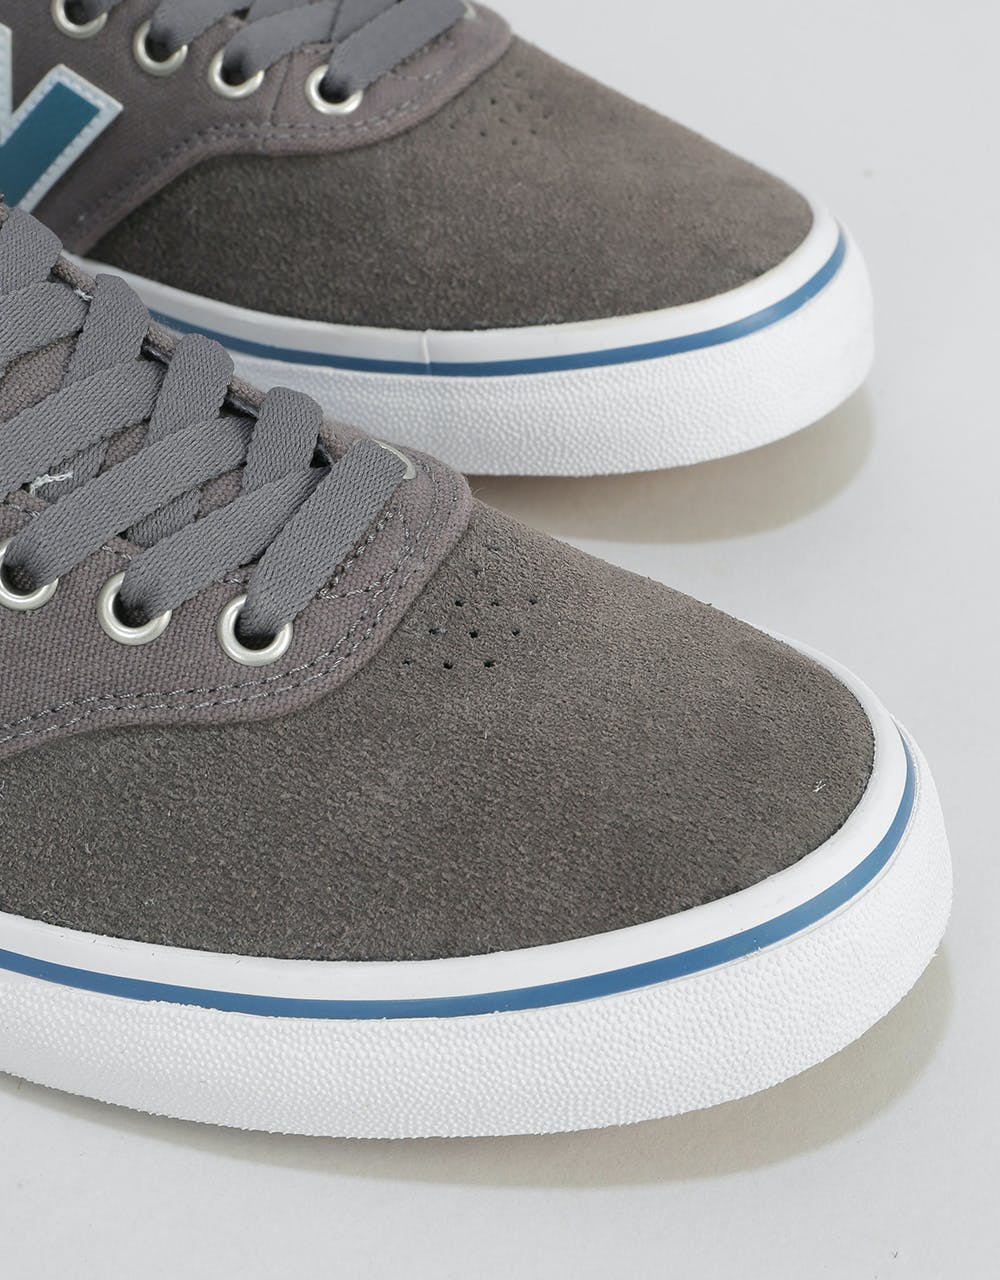 New Balance Numeric 255 Skate Shoes - Grey/Navy